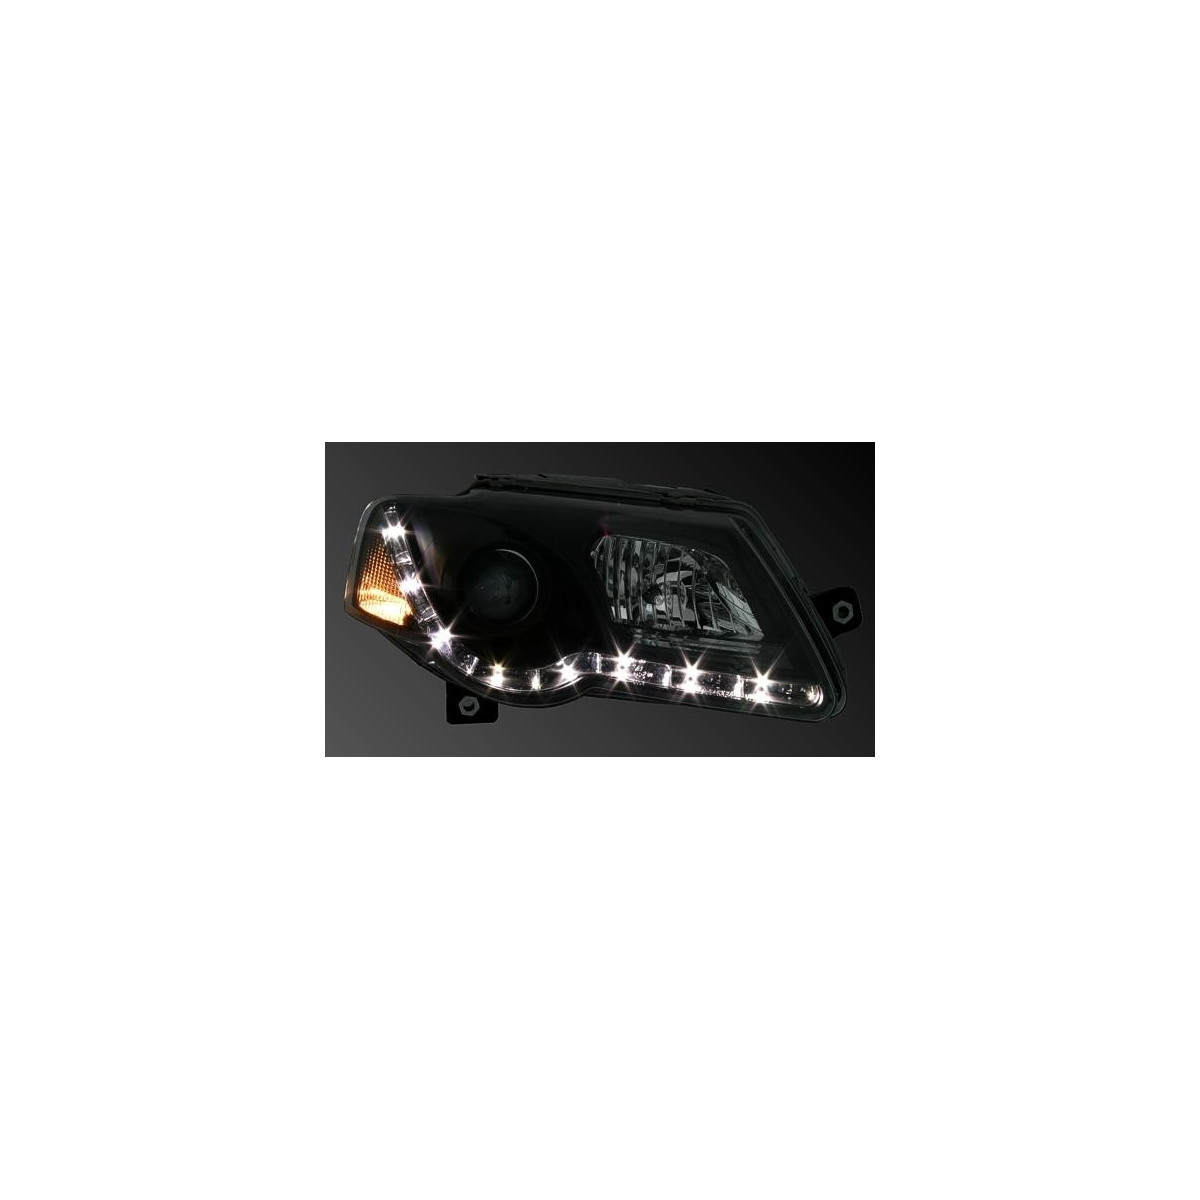 LAMPY DAYLINE VW PASSAT 3C 03/05- CHROM H7/H7